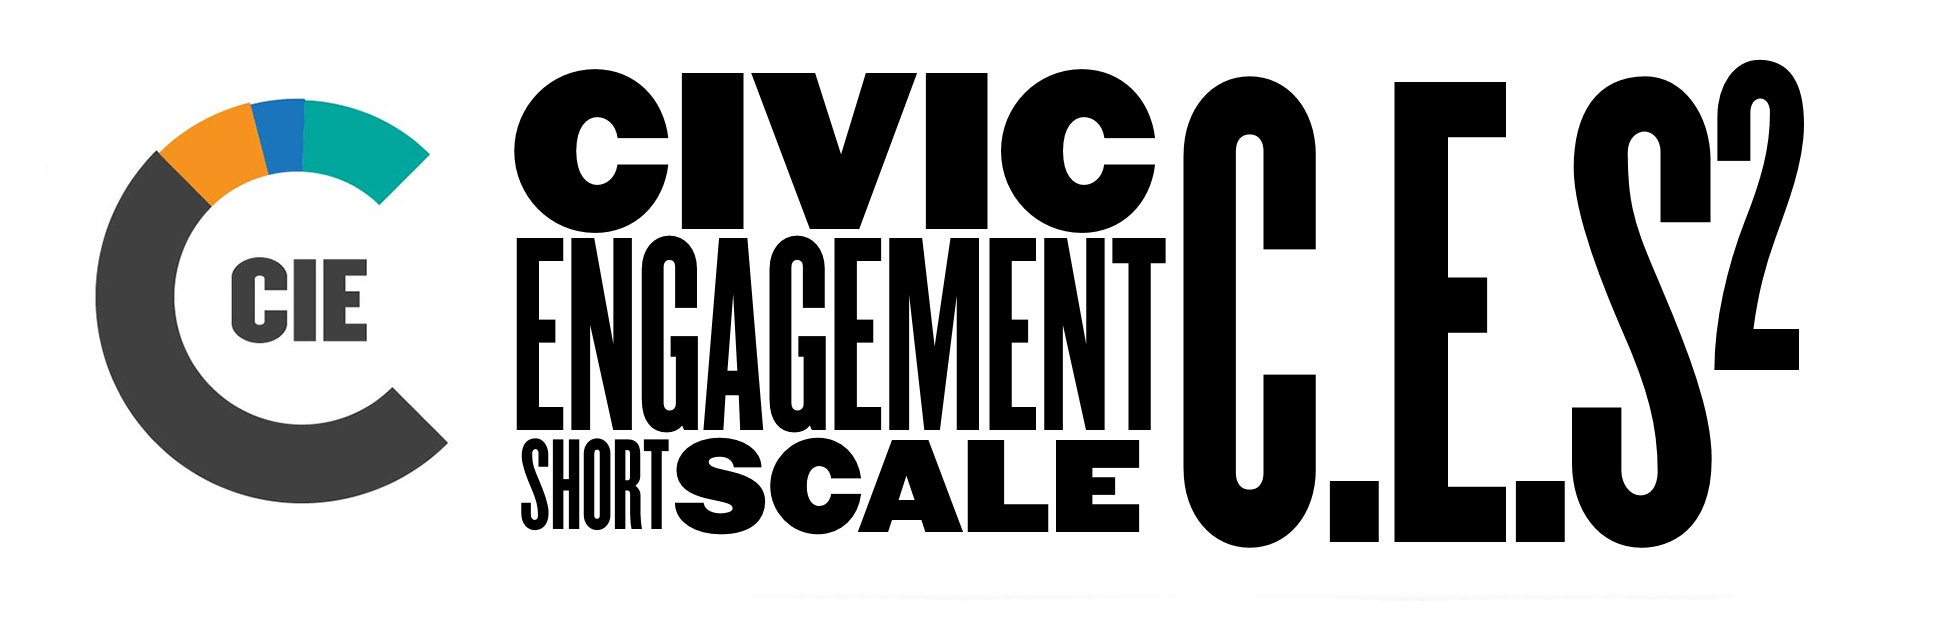 Civic Engagement Short Scale